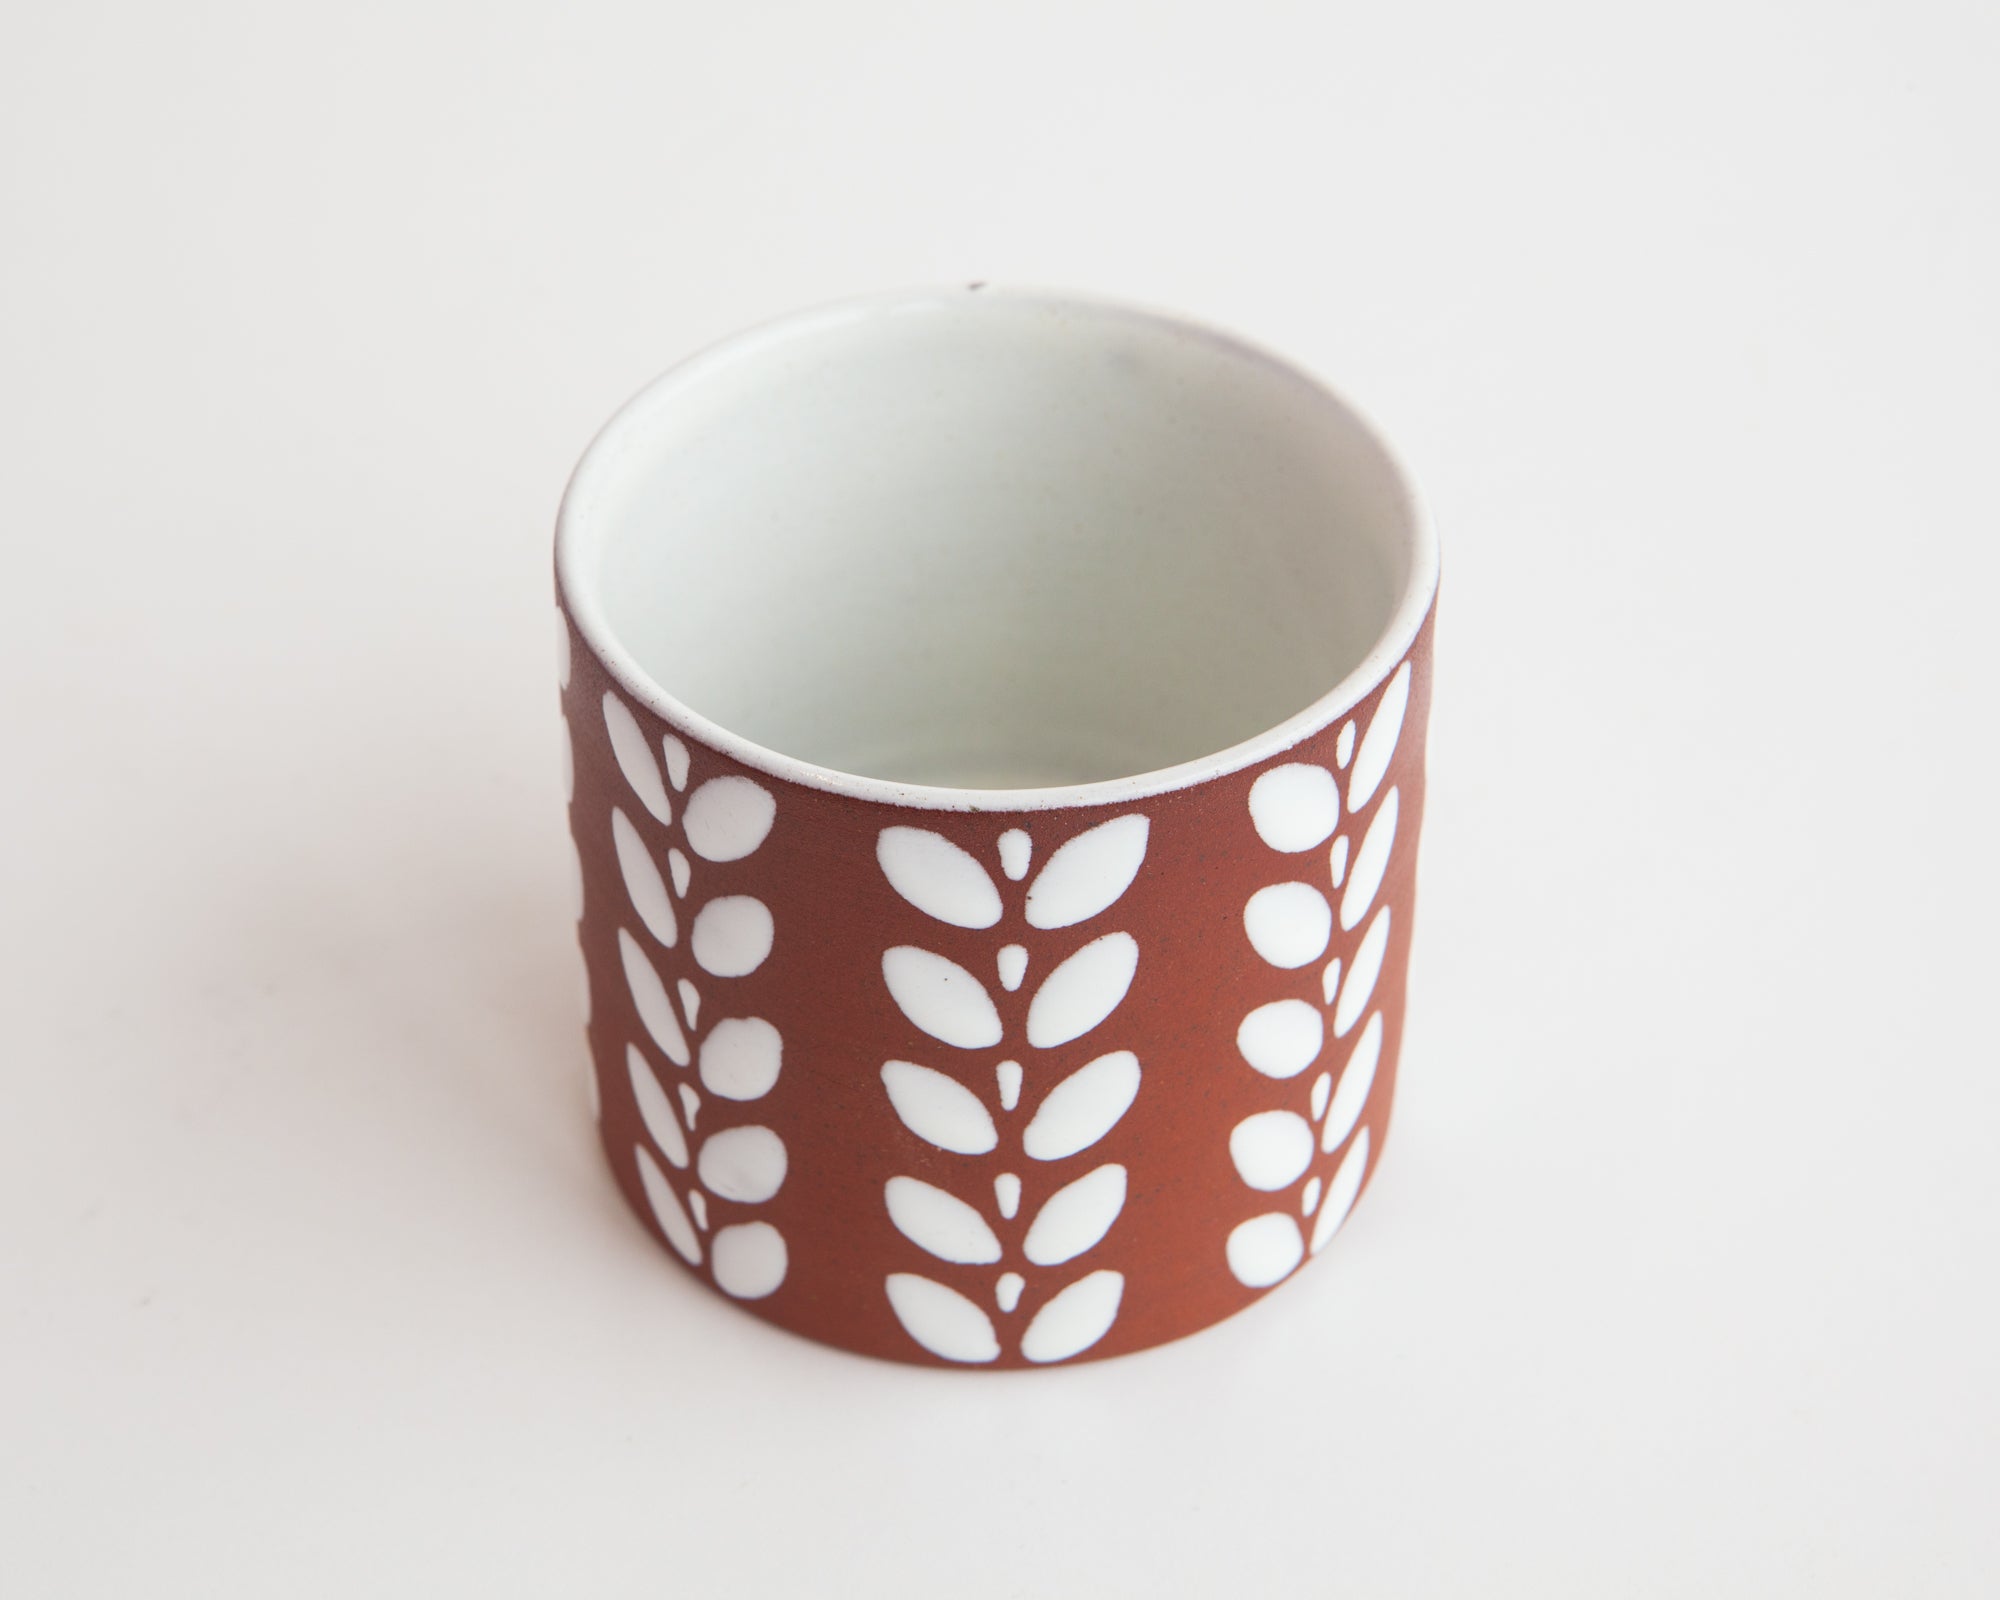 Decorated Leaf Pattern Vase by Joska Keramik